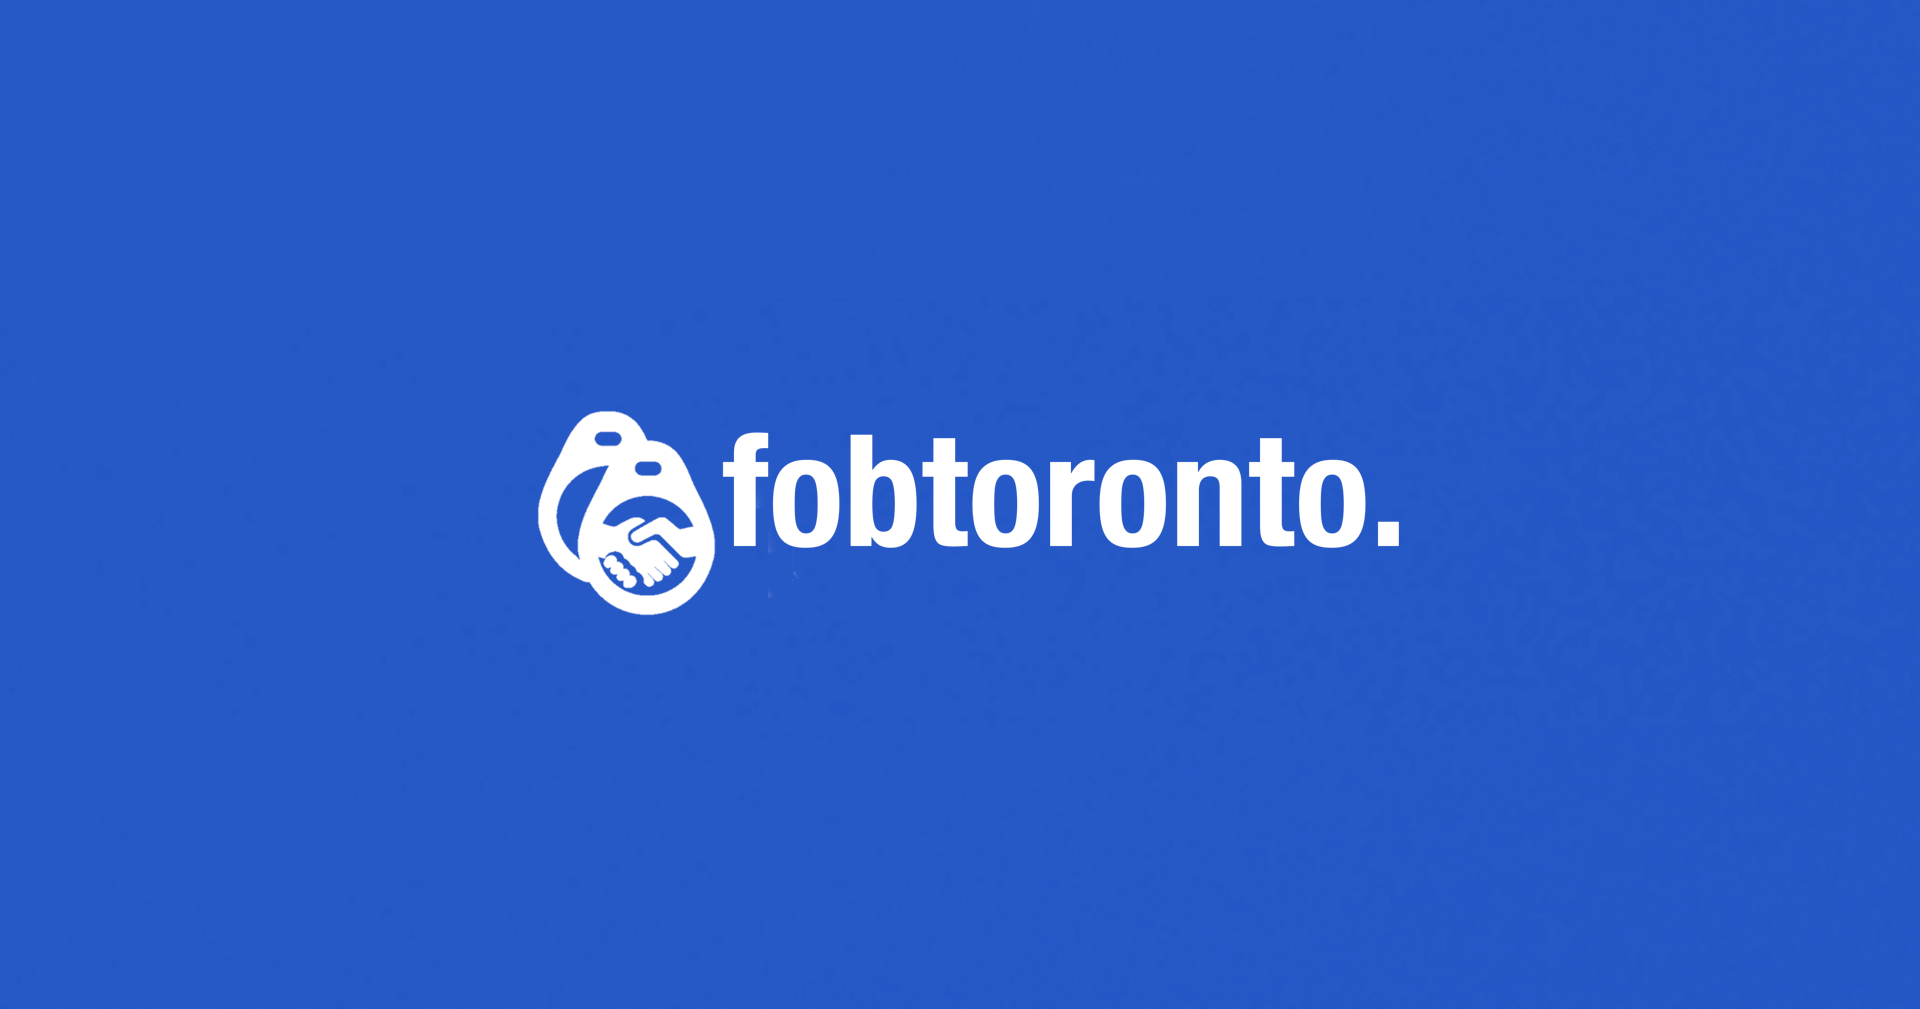 fobtoronto fob duplication service logo